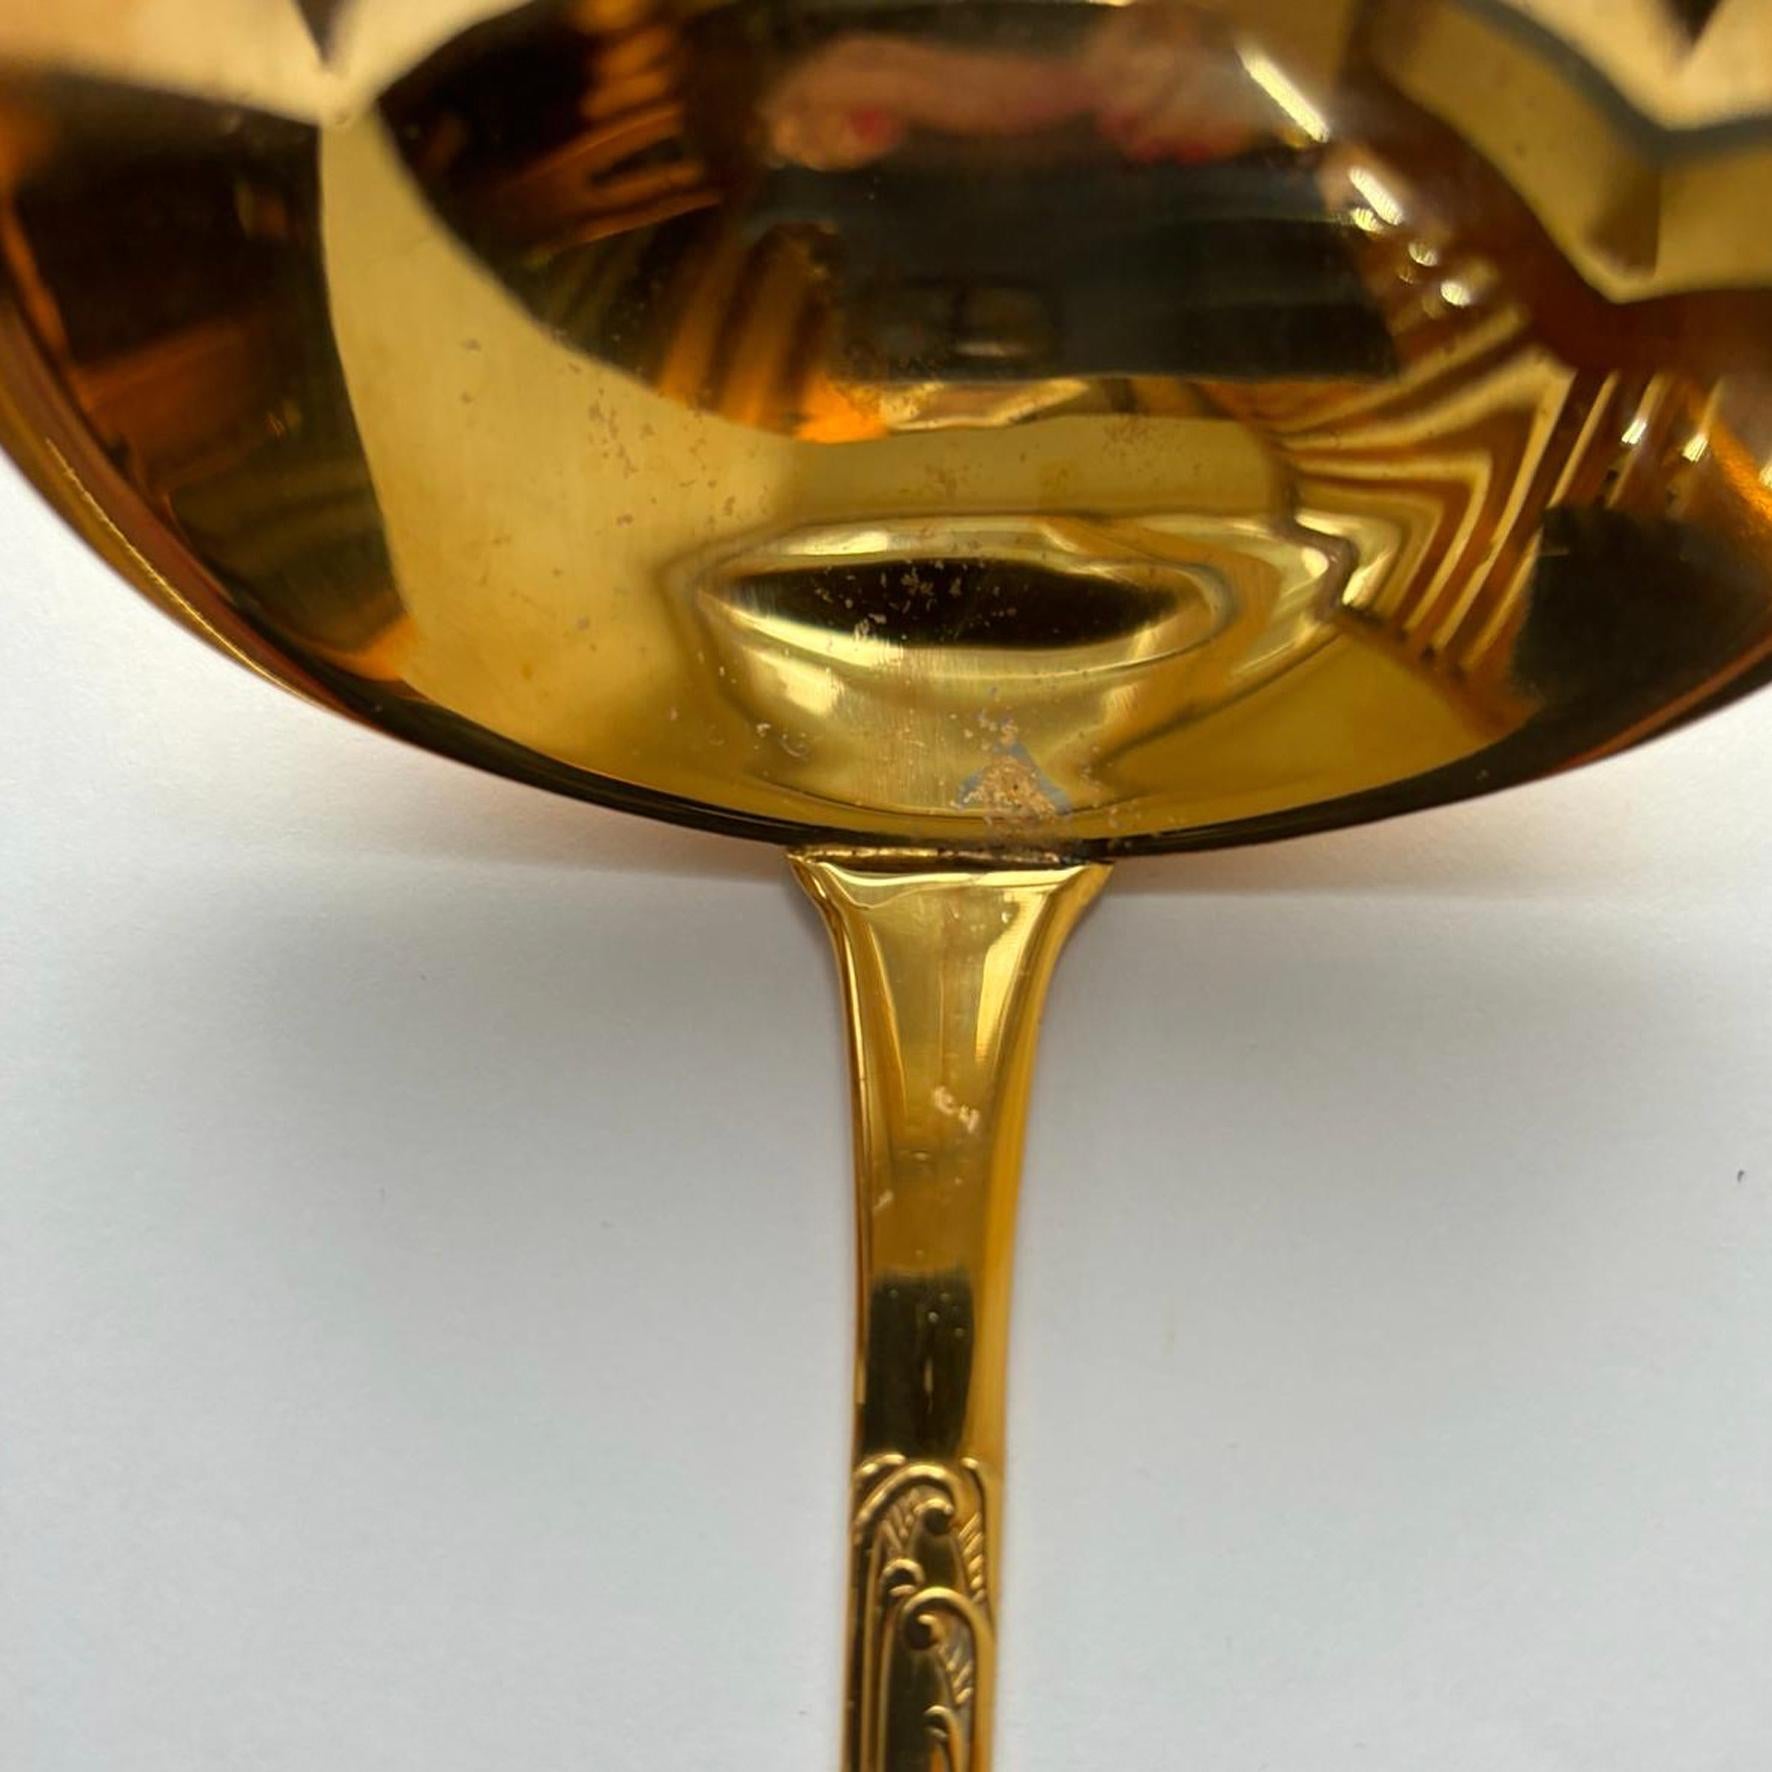 Bestecke Solingen German 23/24 Karat Gold-Plated 70pcs / 12 Person Cutlery Set For Sale 11